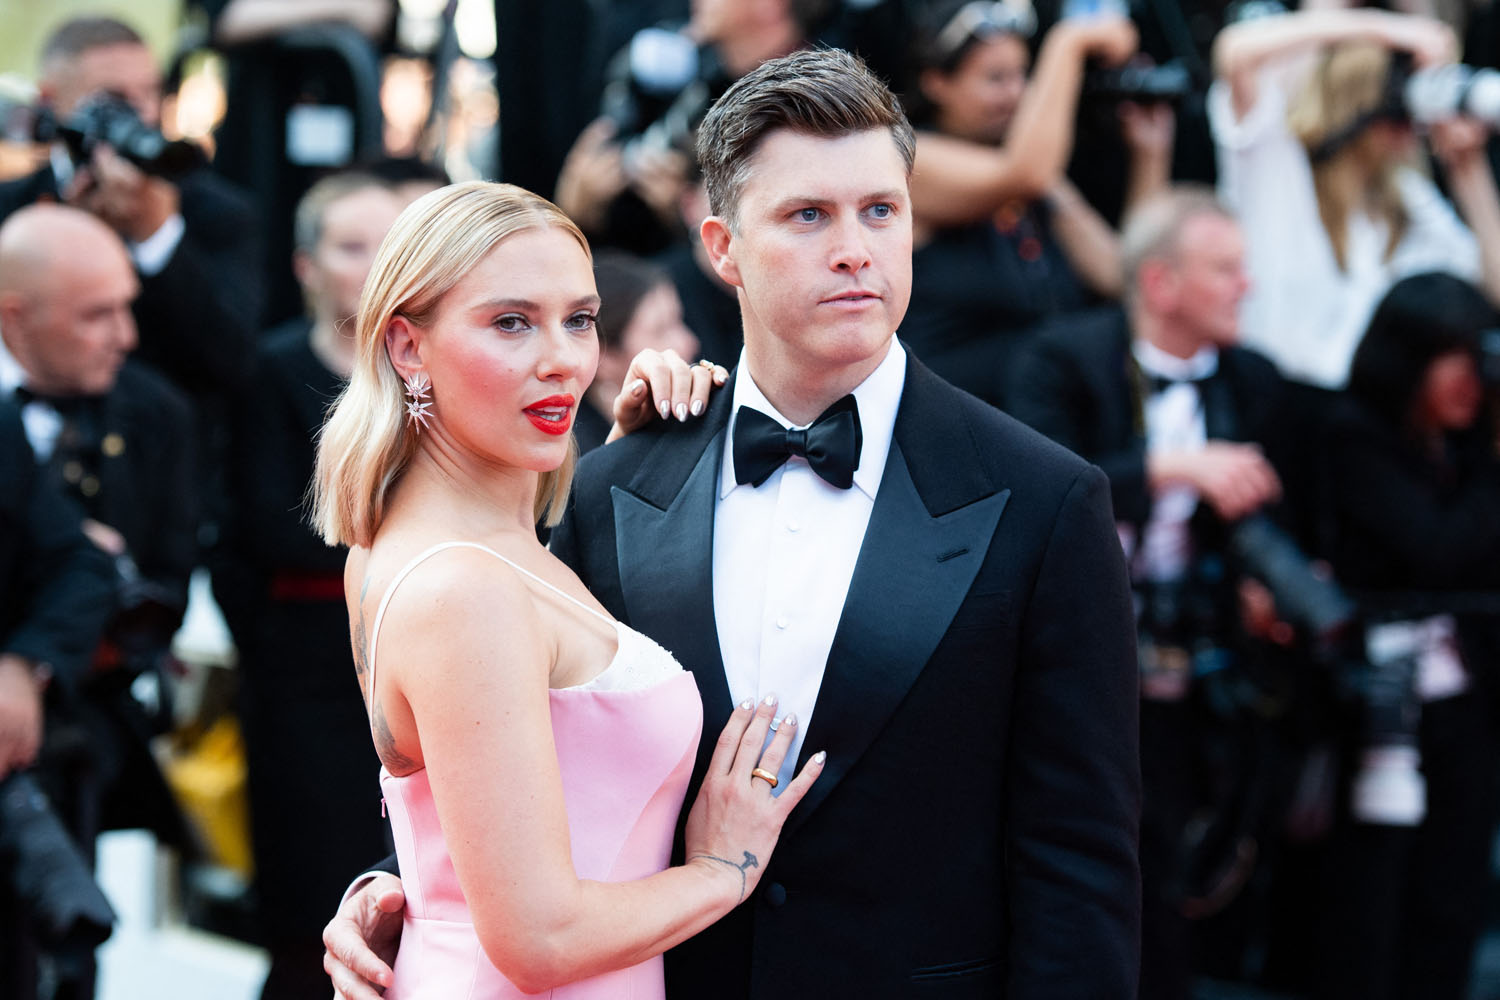 Scarlett Johansson and Colin Jost Turn Heads at Cannes Film Festival